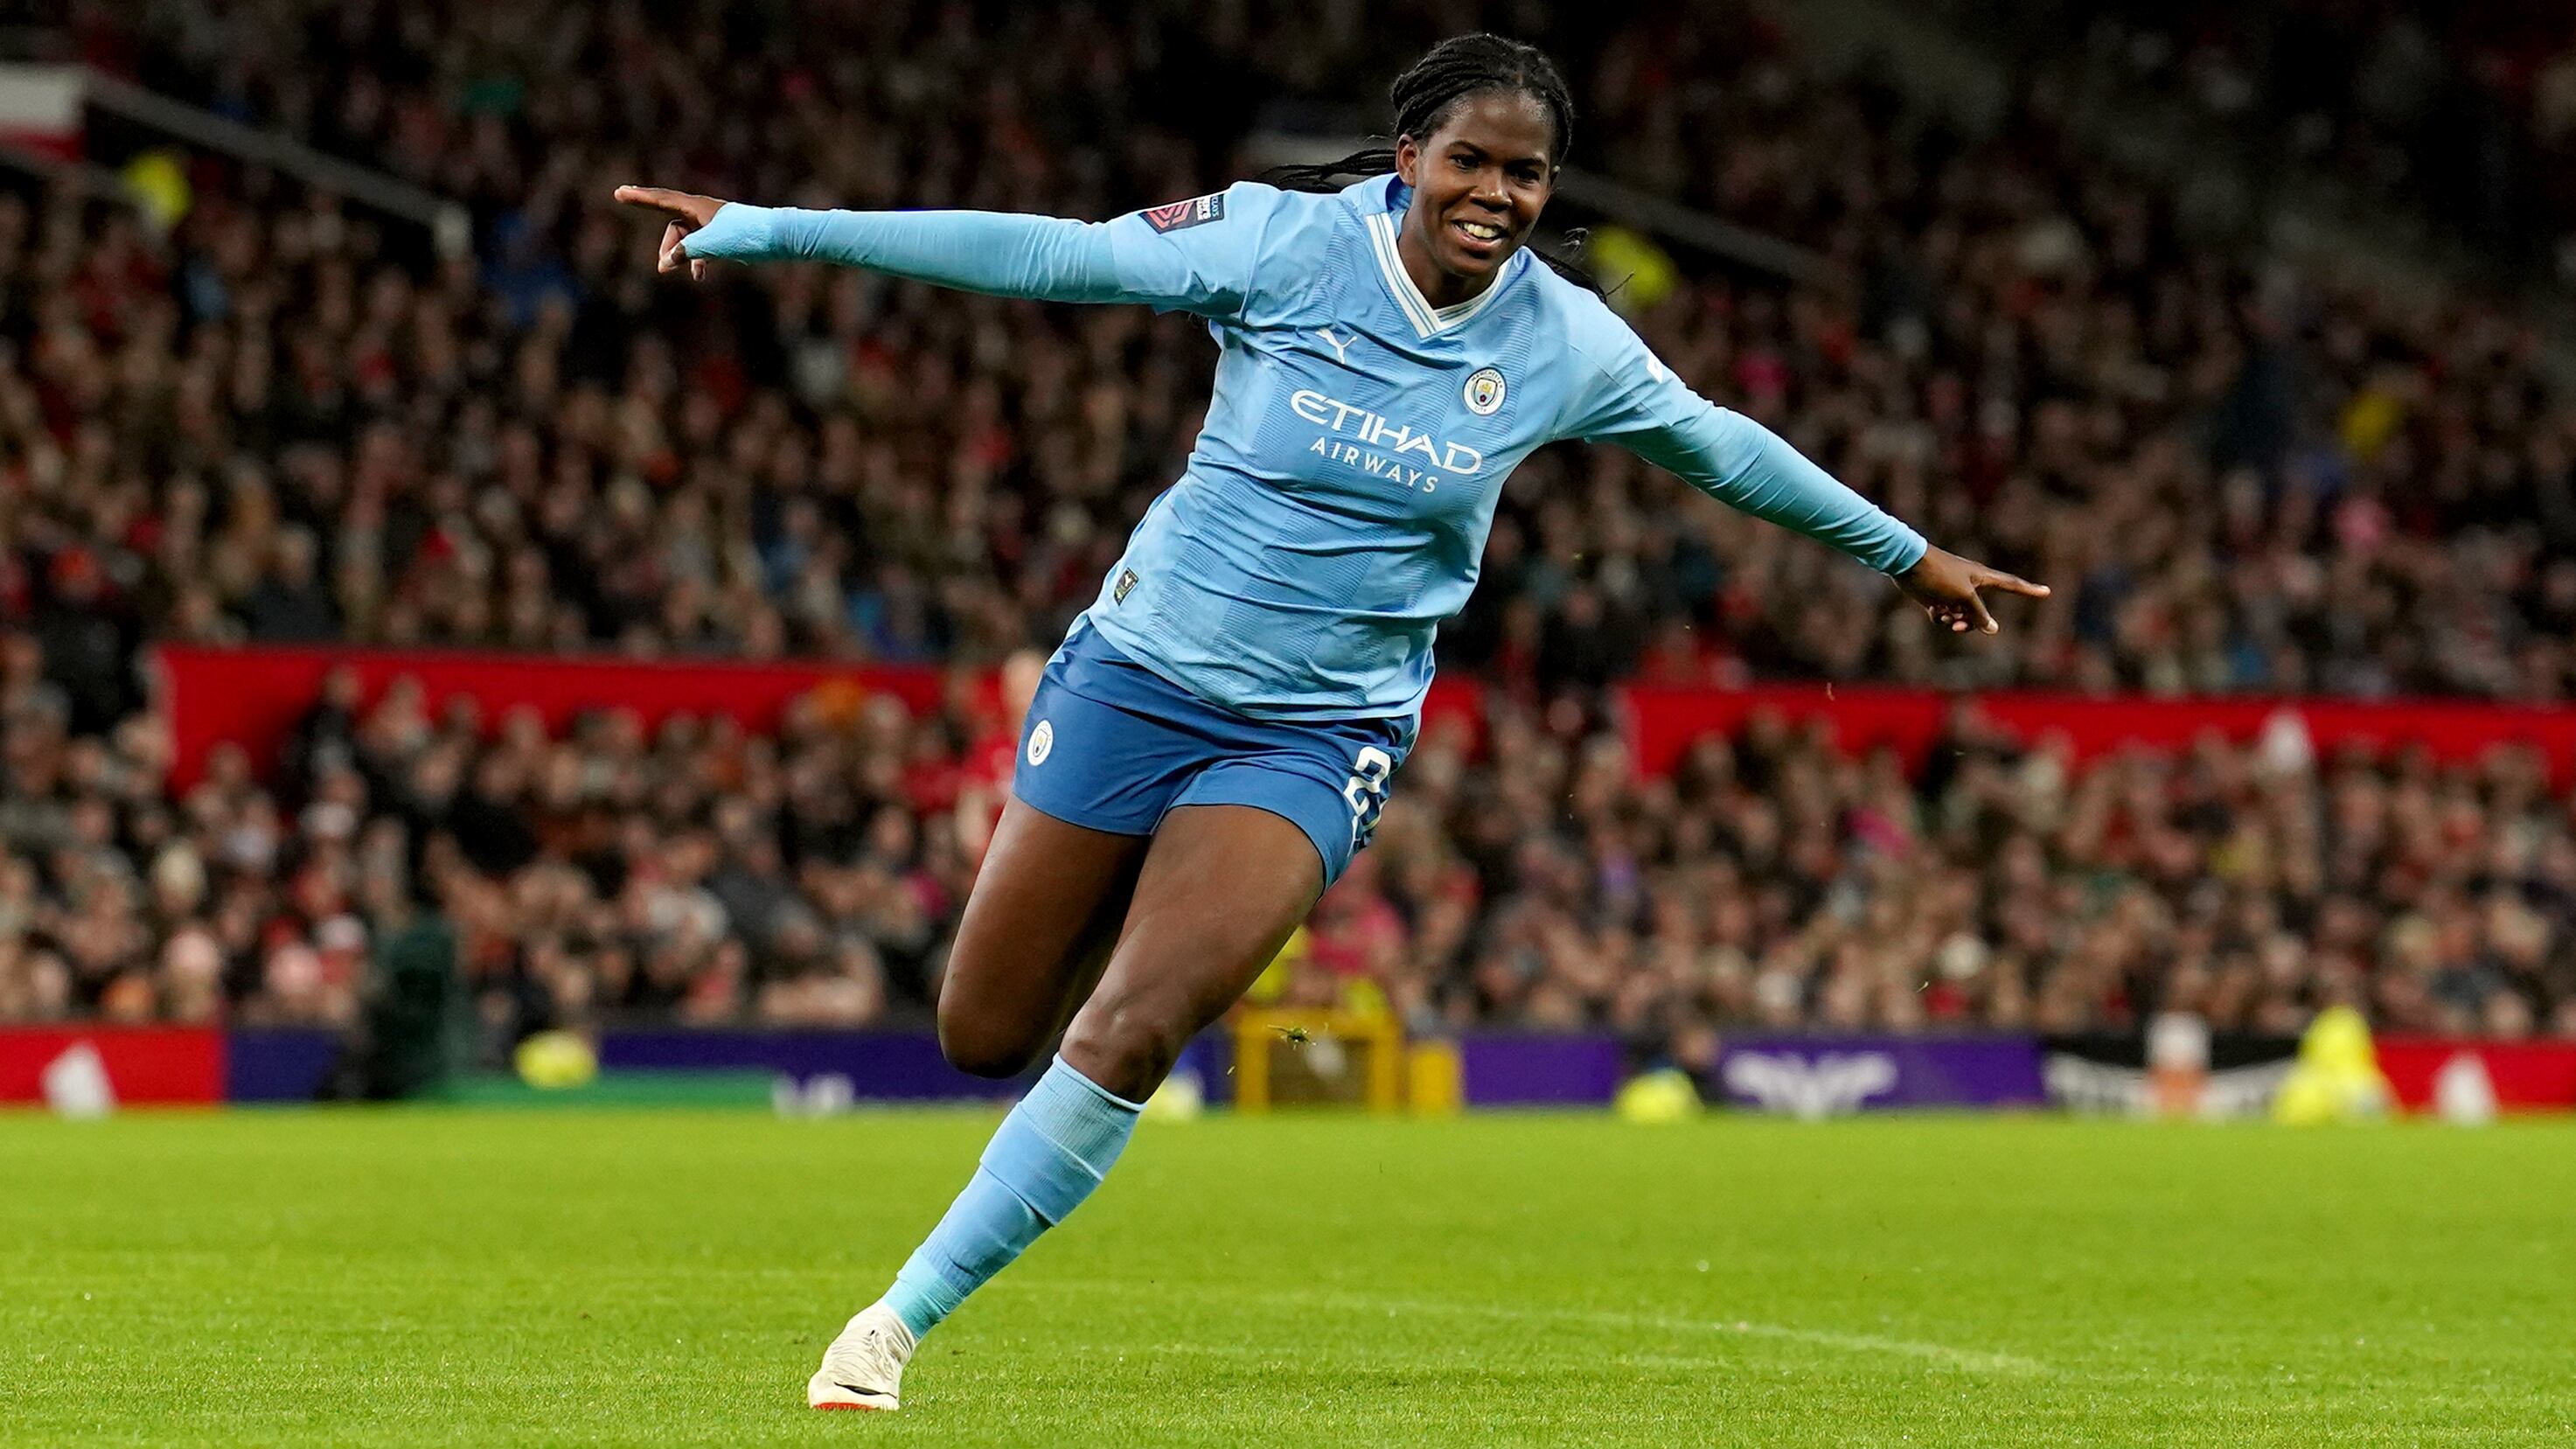 Khadija Shaw is “reaping the rewards” at Manchester City